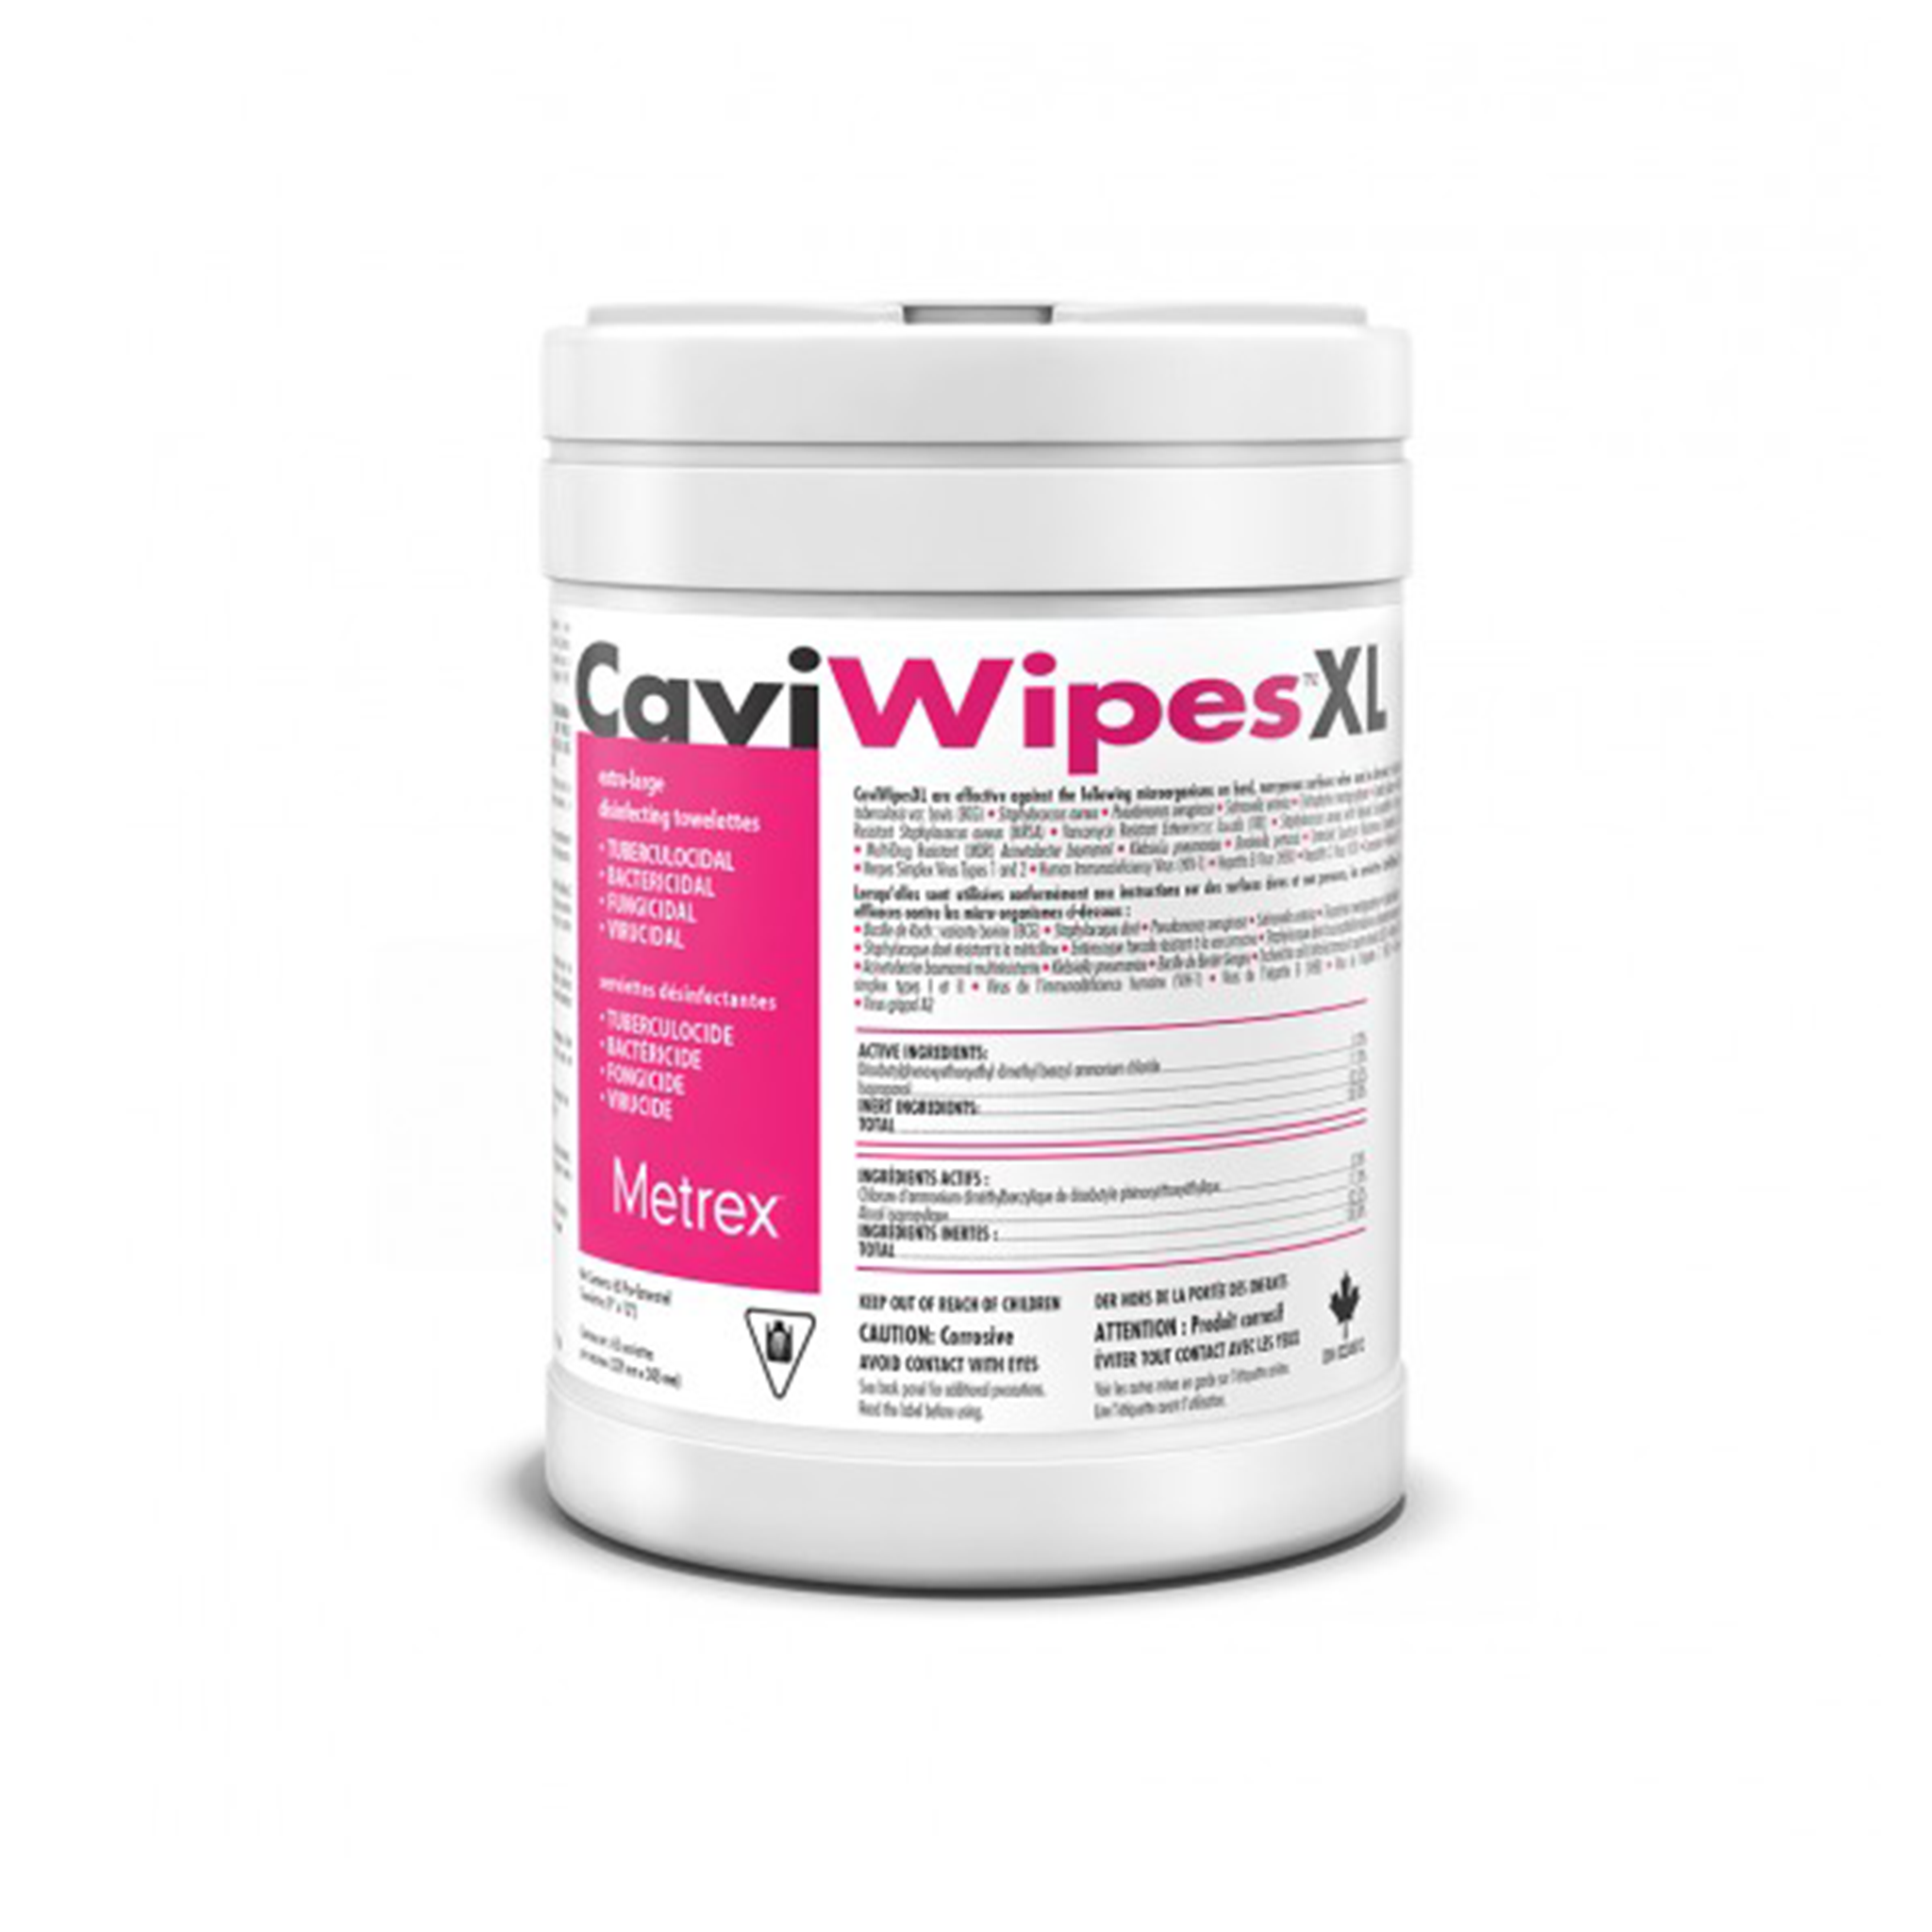 CaviWipesXL Disinfecting Wipes – 65 Count